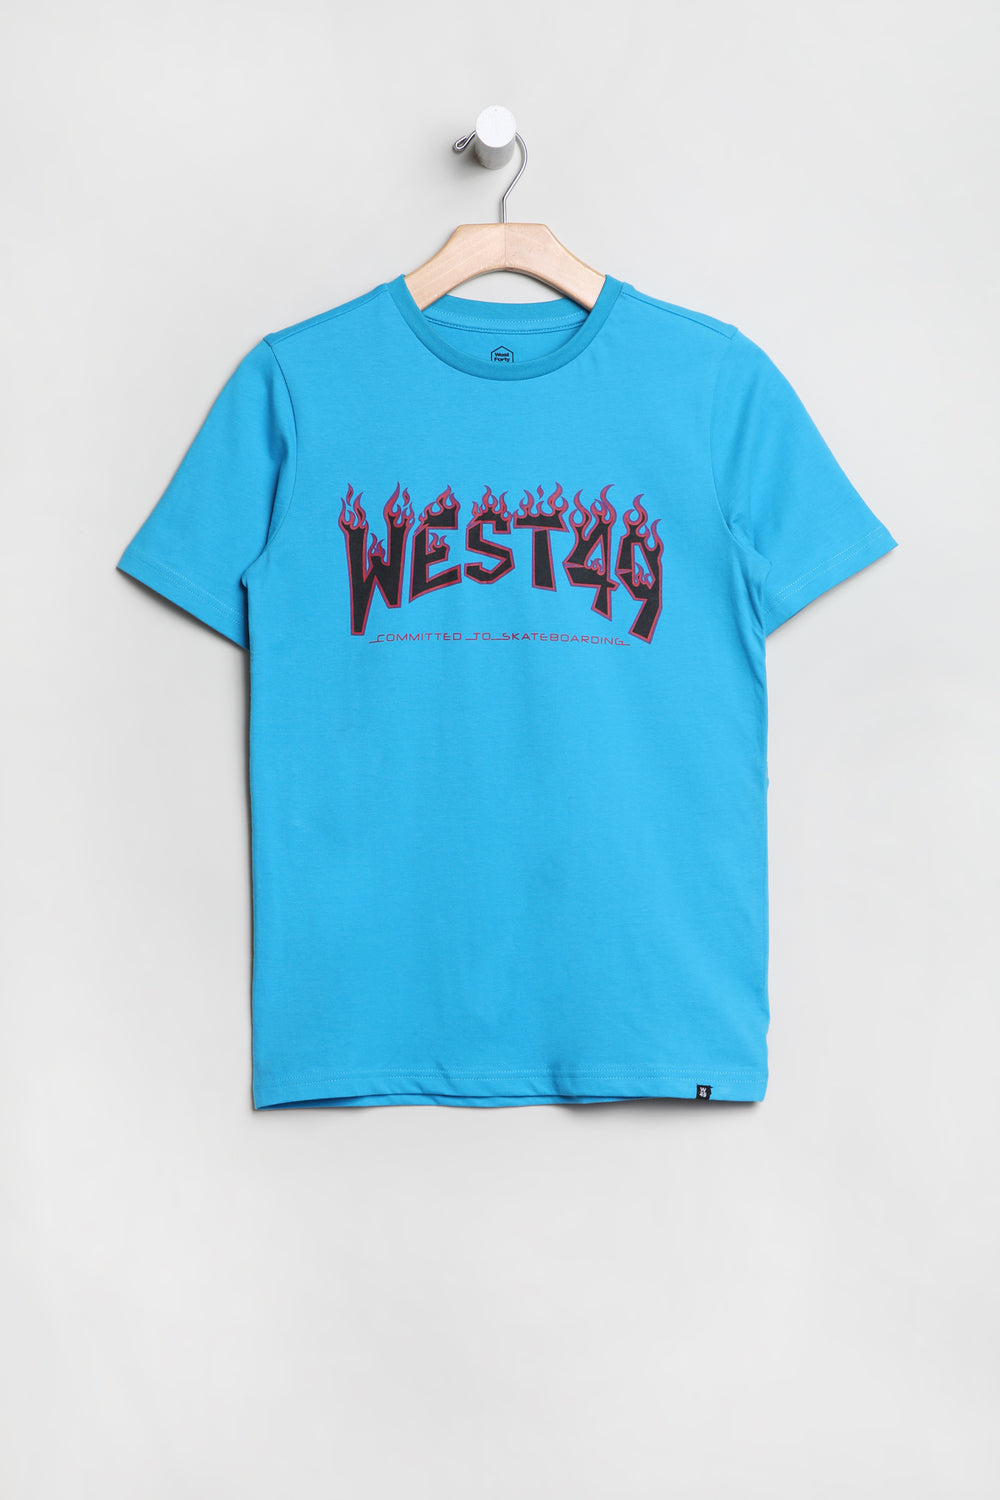 T-Shirt Imprimé Logo Flamme West49 Junior Ocean